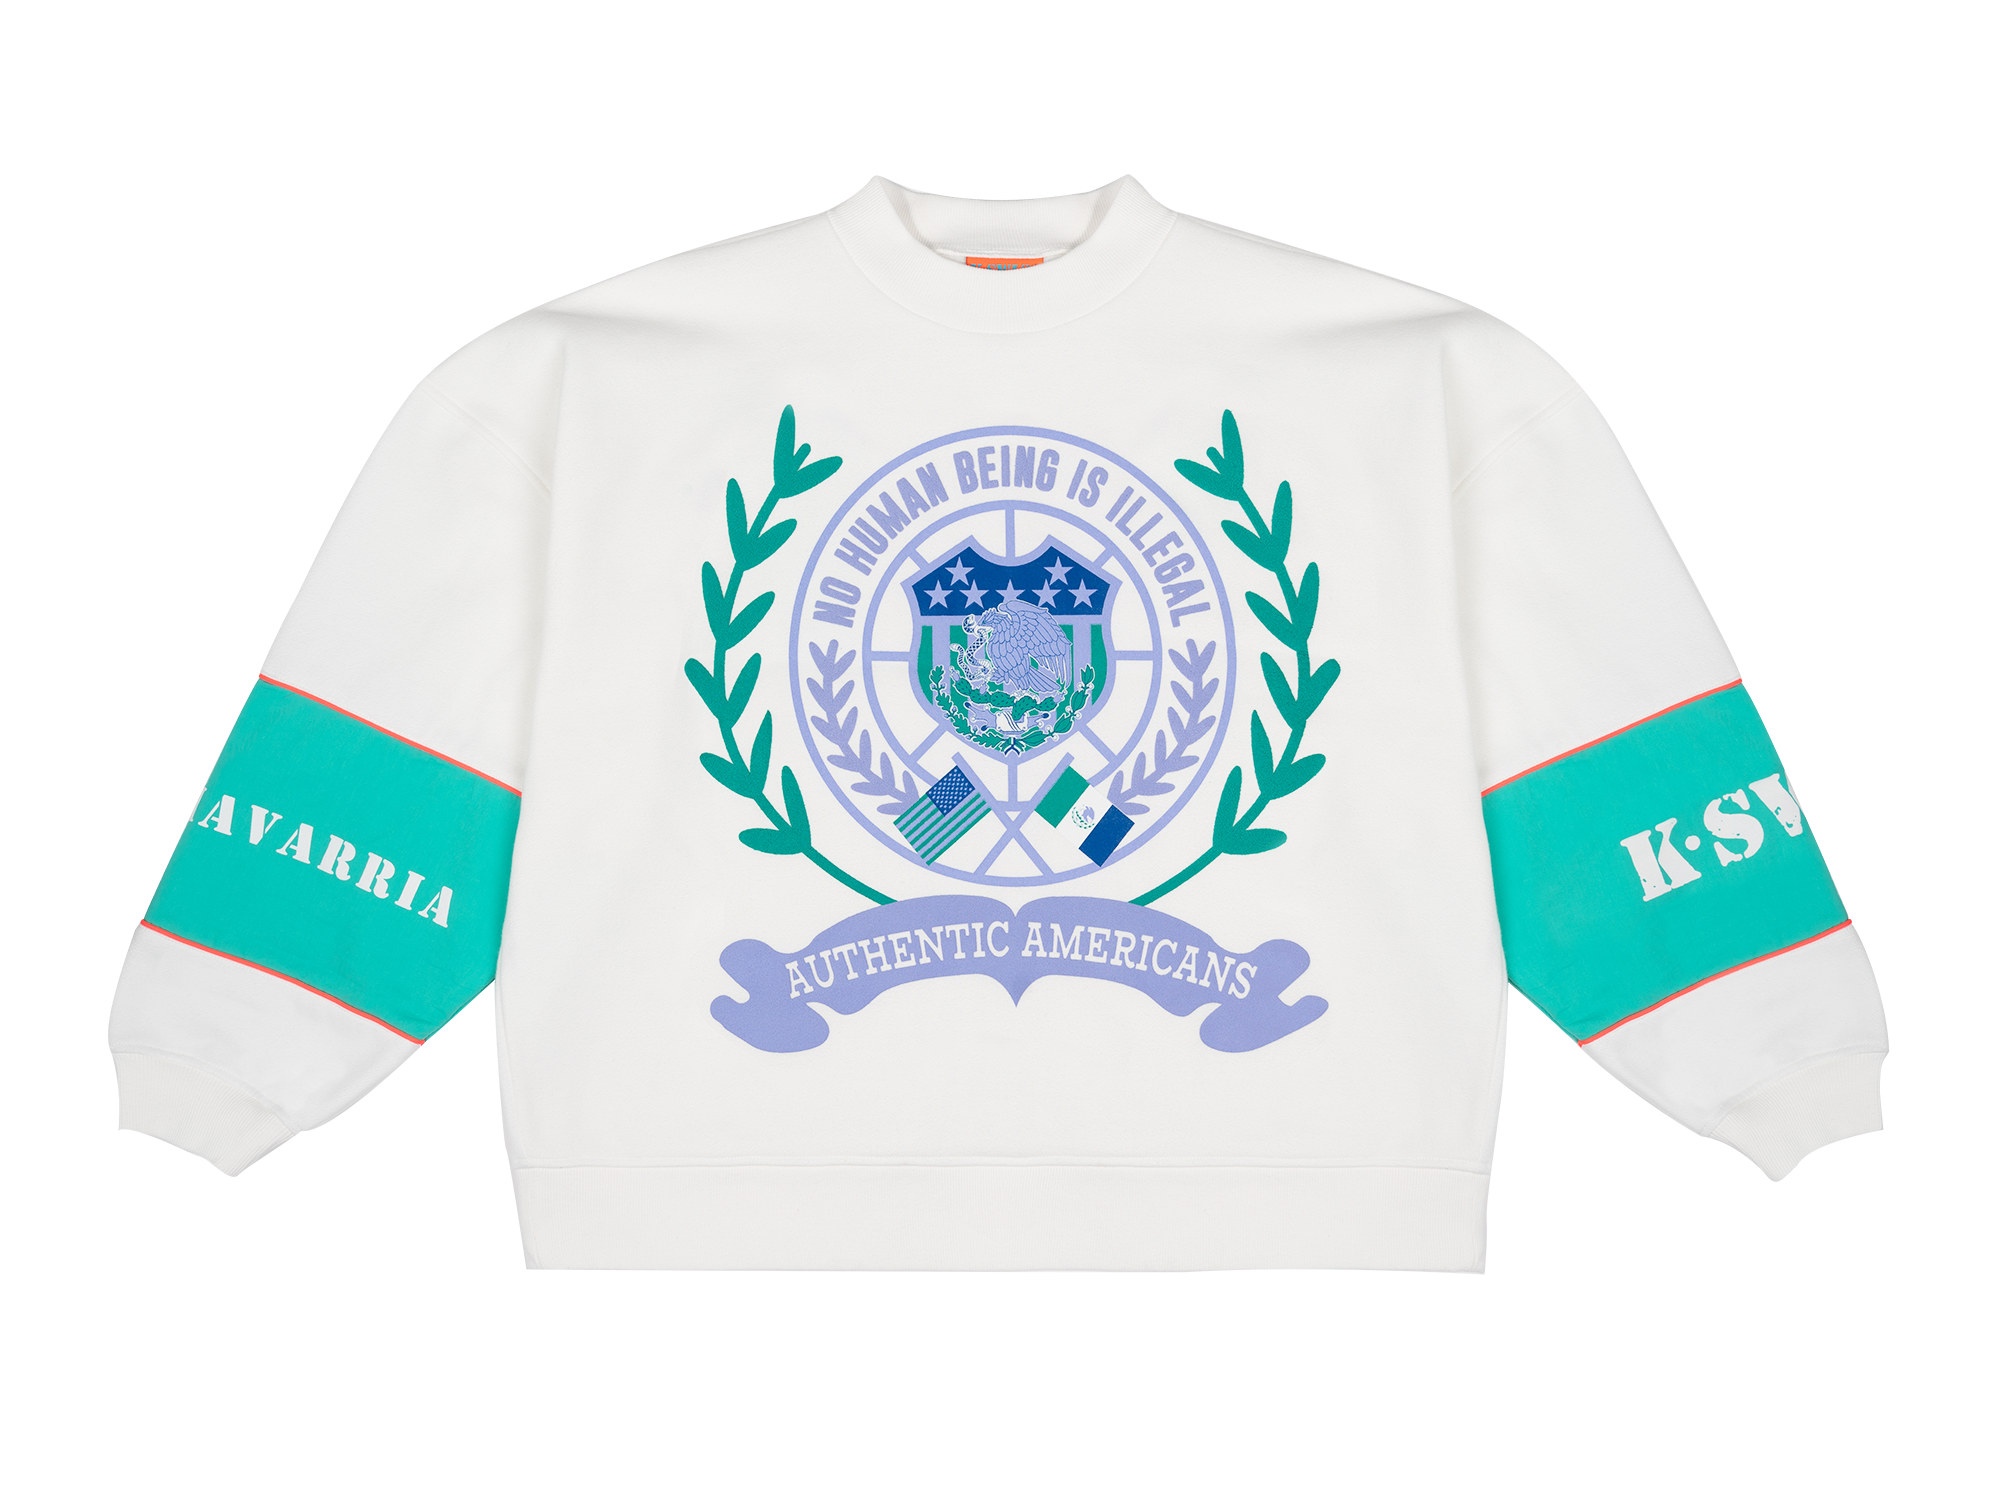 WILLY CHAVARRIA K-SWISS クルーネック トレーナー Tシャツ/カットソー(七分/長袖) サイト無料